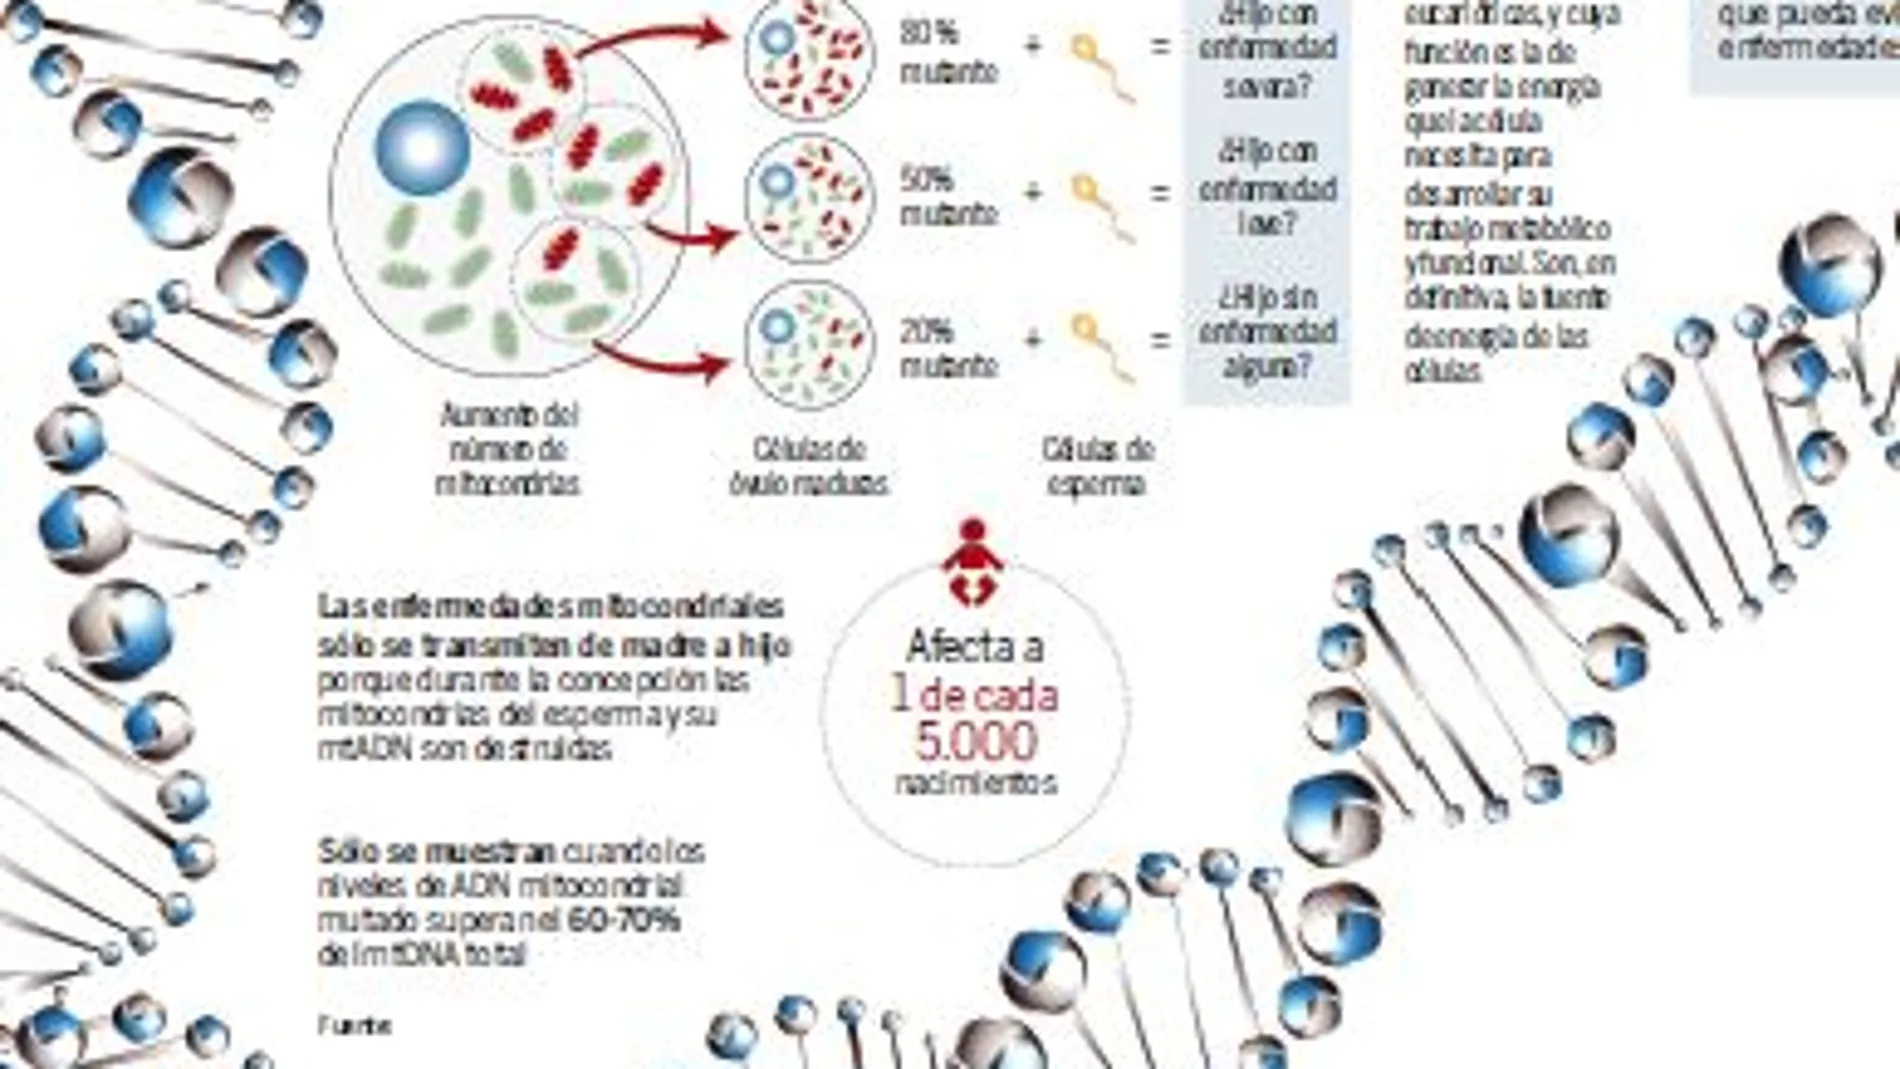 Manipulan el ADN para erradicar enfermedades hereditarias